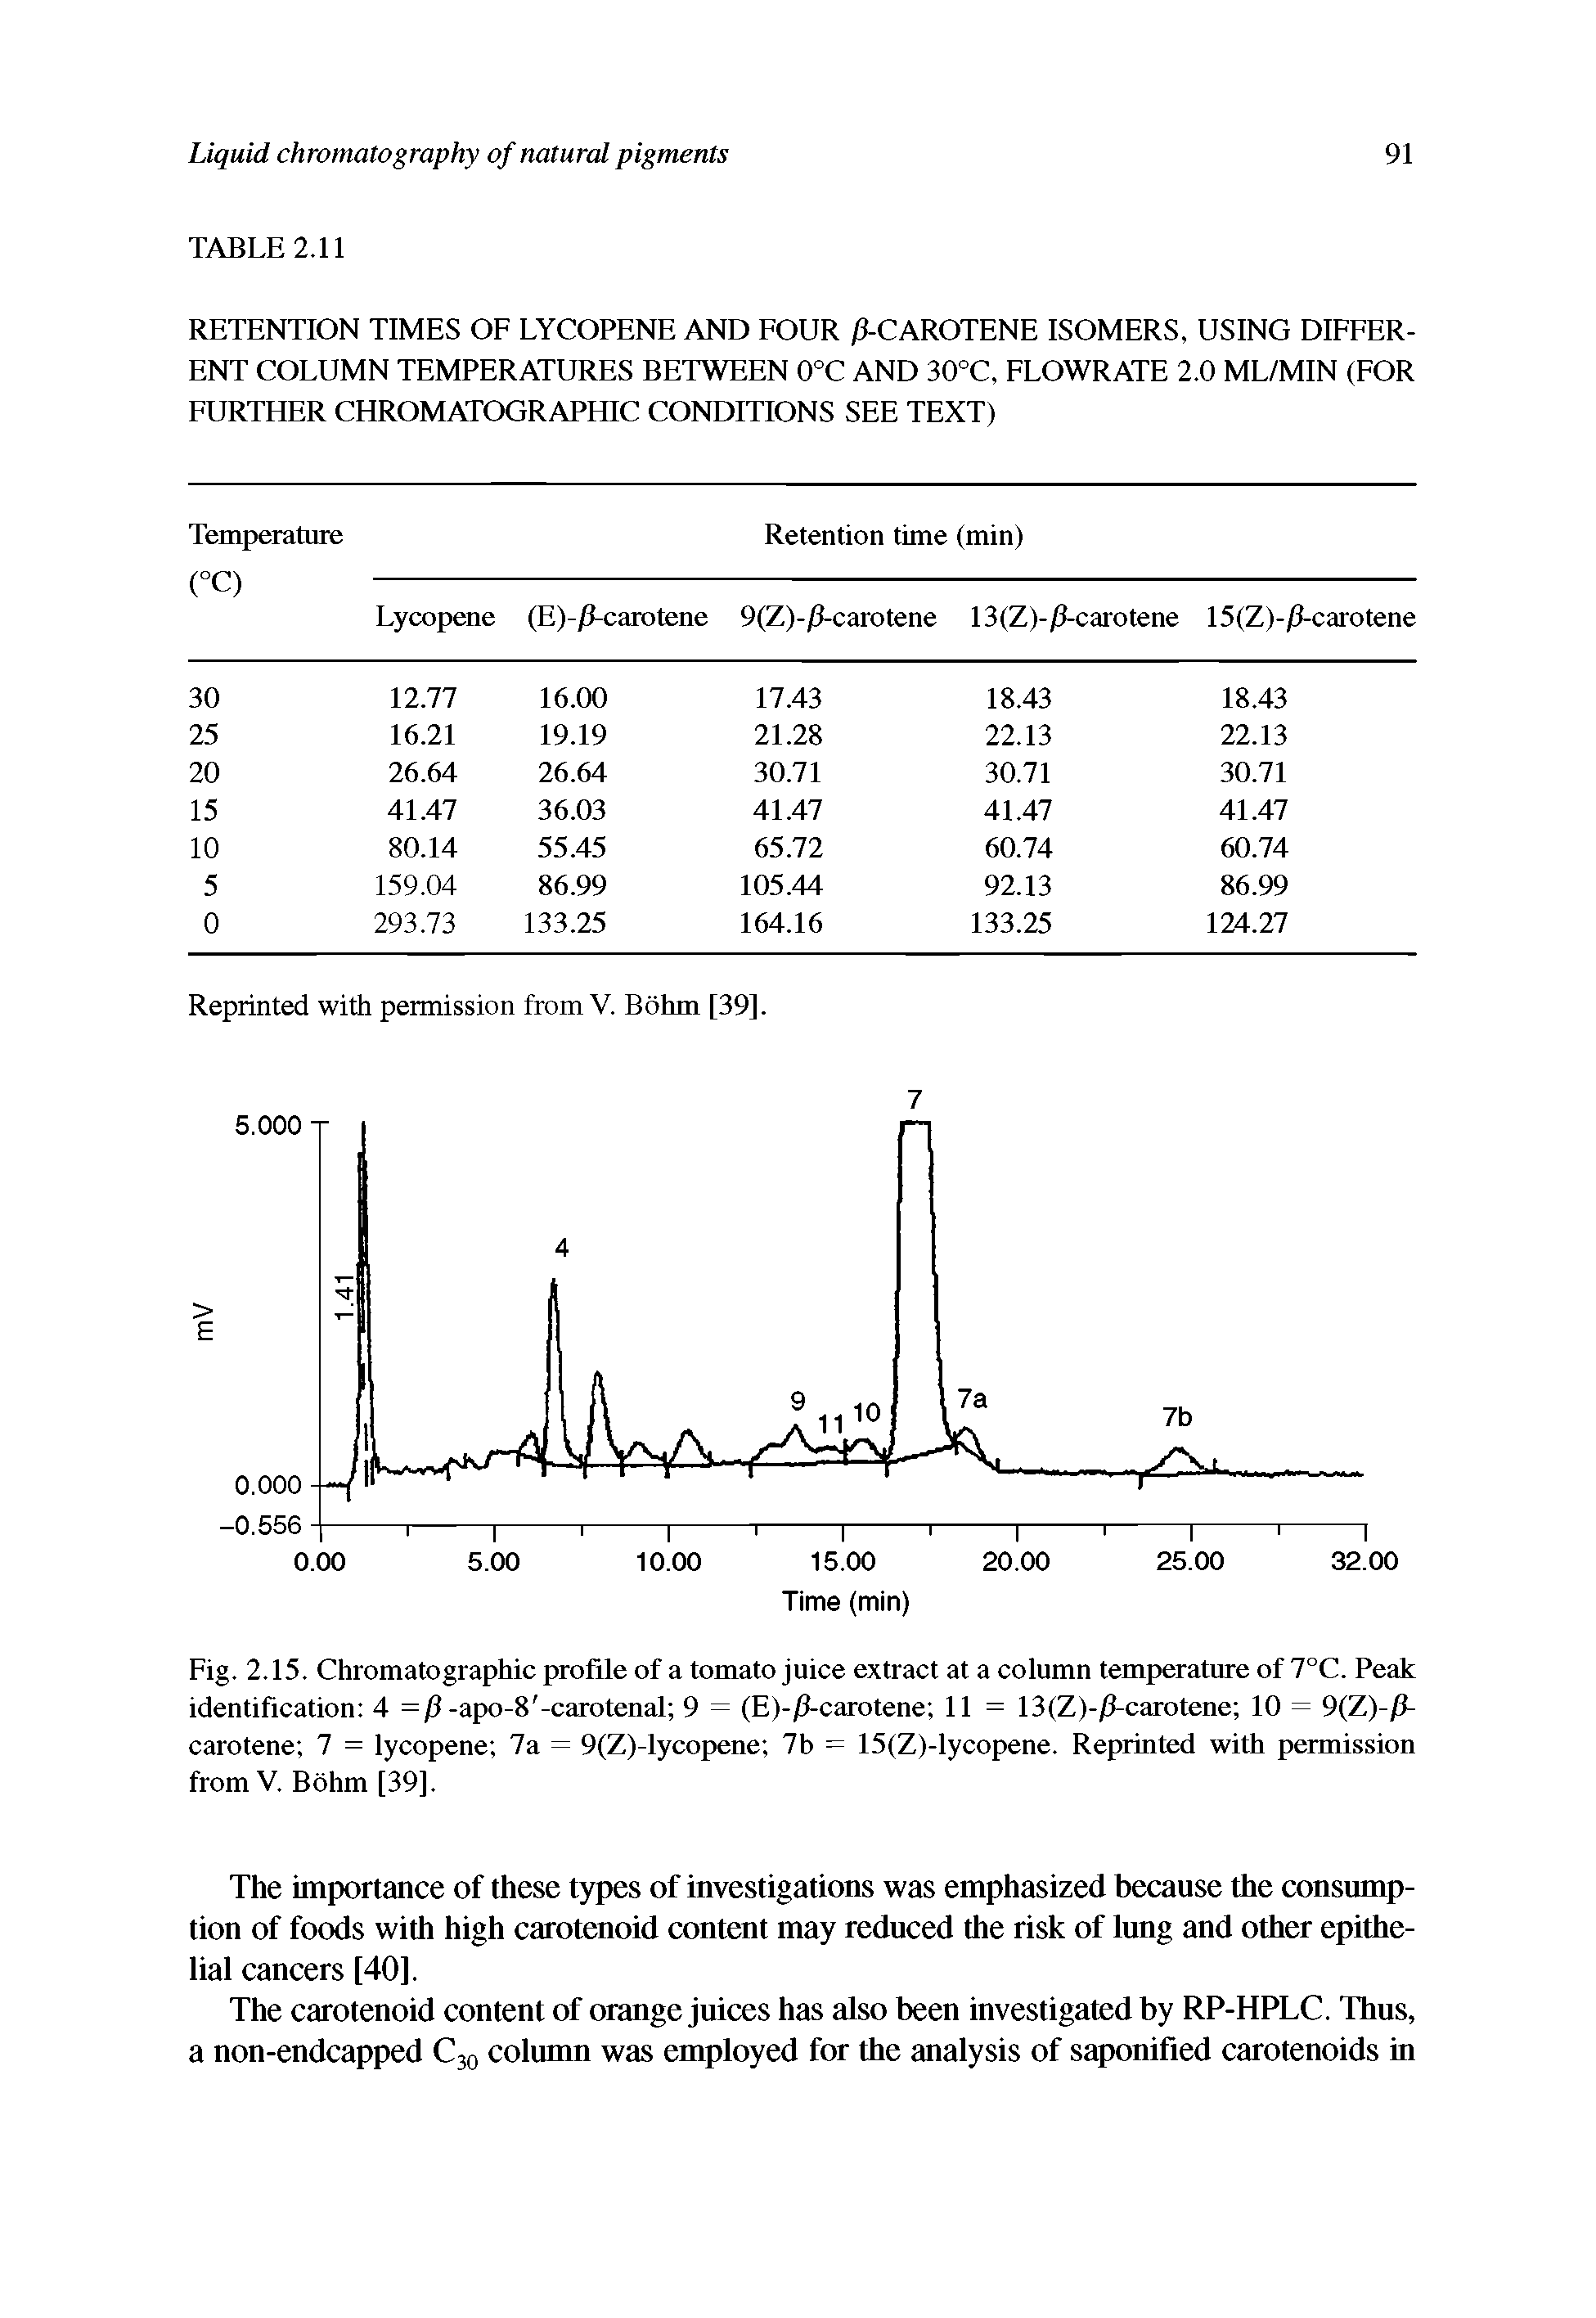 Fig. 2.15. Chromatographic profile of a tomato juice extract at a column temperature of 7°C. Peak identification 4 =/0-apo-8 -carotenal 9 = (E)-/0-carotene 11 = 13(Z)-/0-carotene 10 = 9(Z)-/0-carotene 7 = lycopene 7a = 9(Z)-lycopene 7b = 15(Z)-lycopene. Reprinted with permission from V. Bohm [39],...